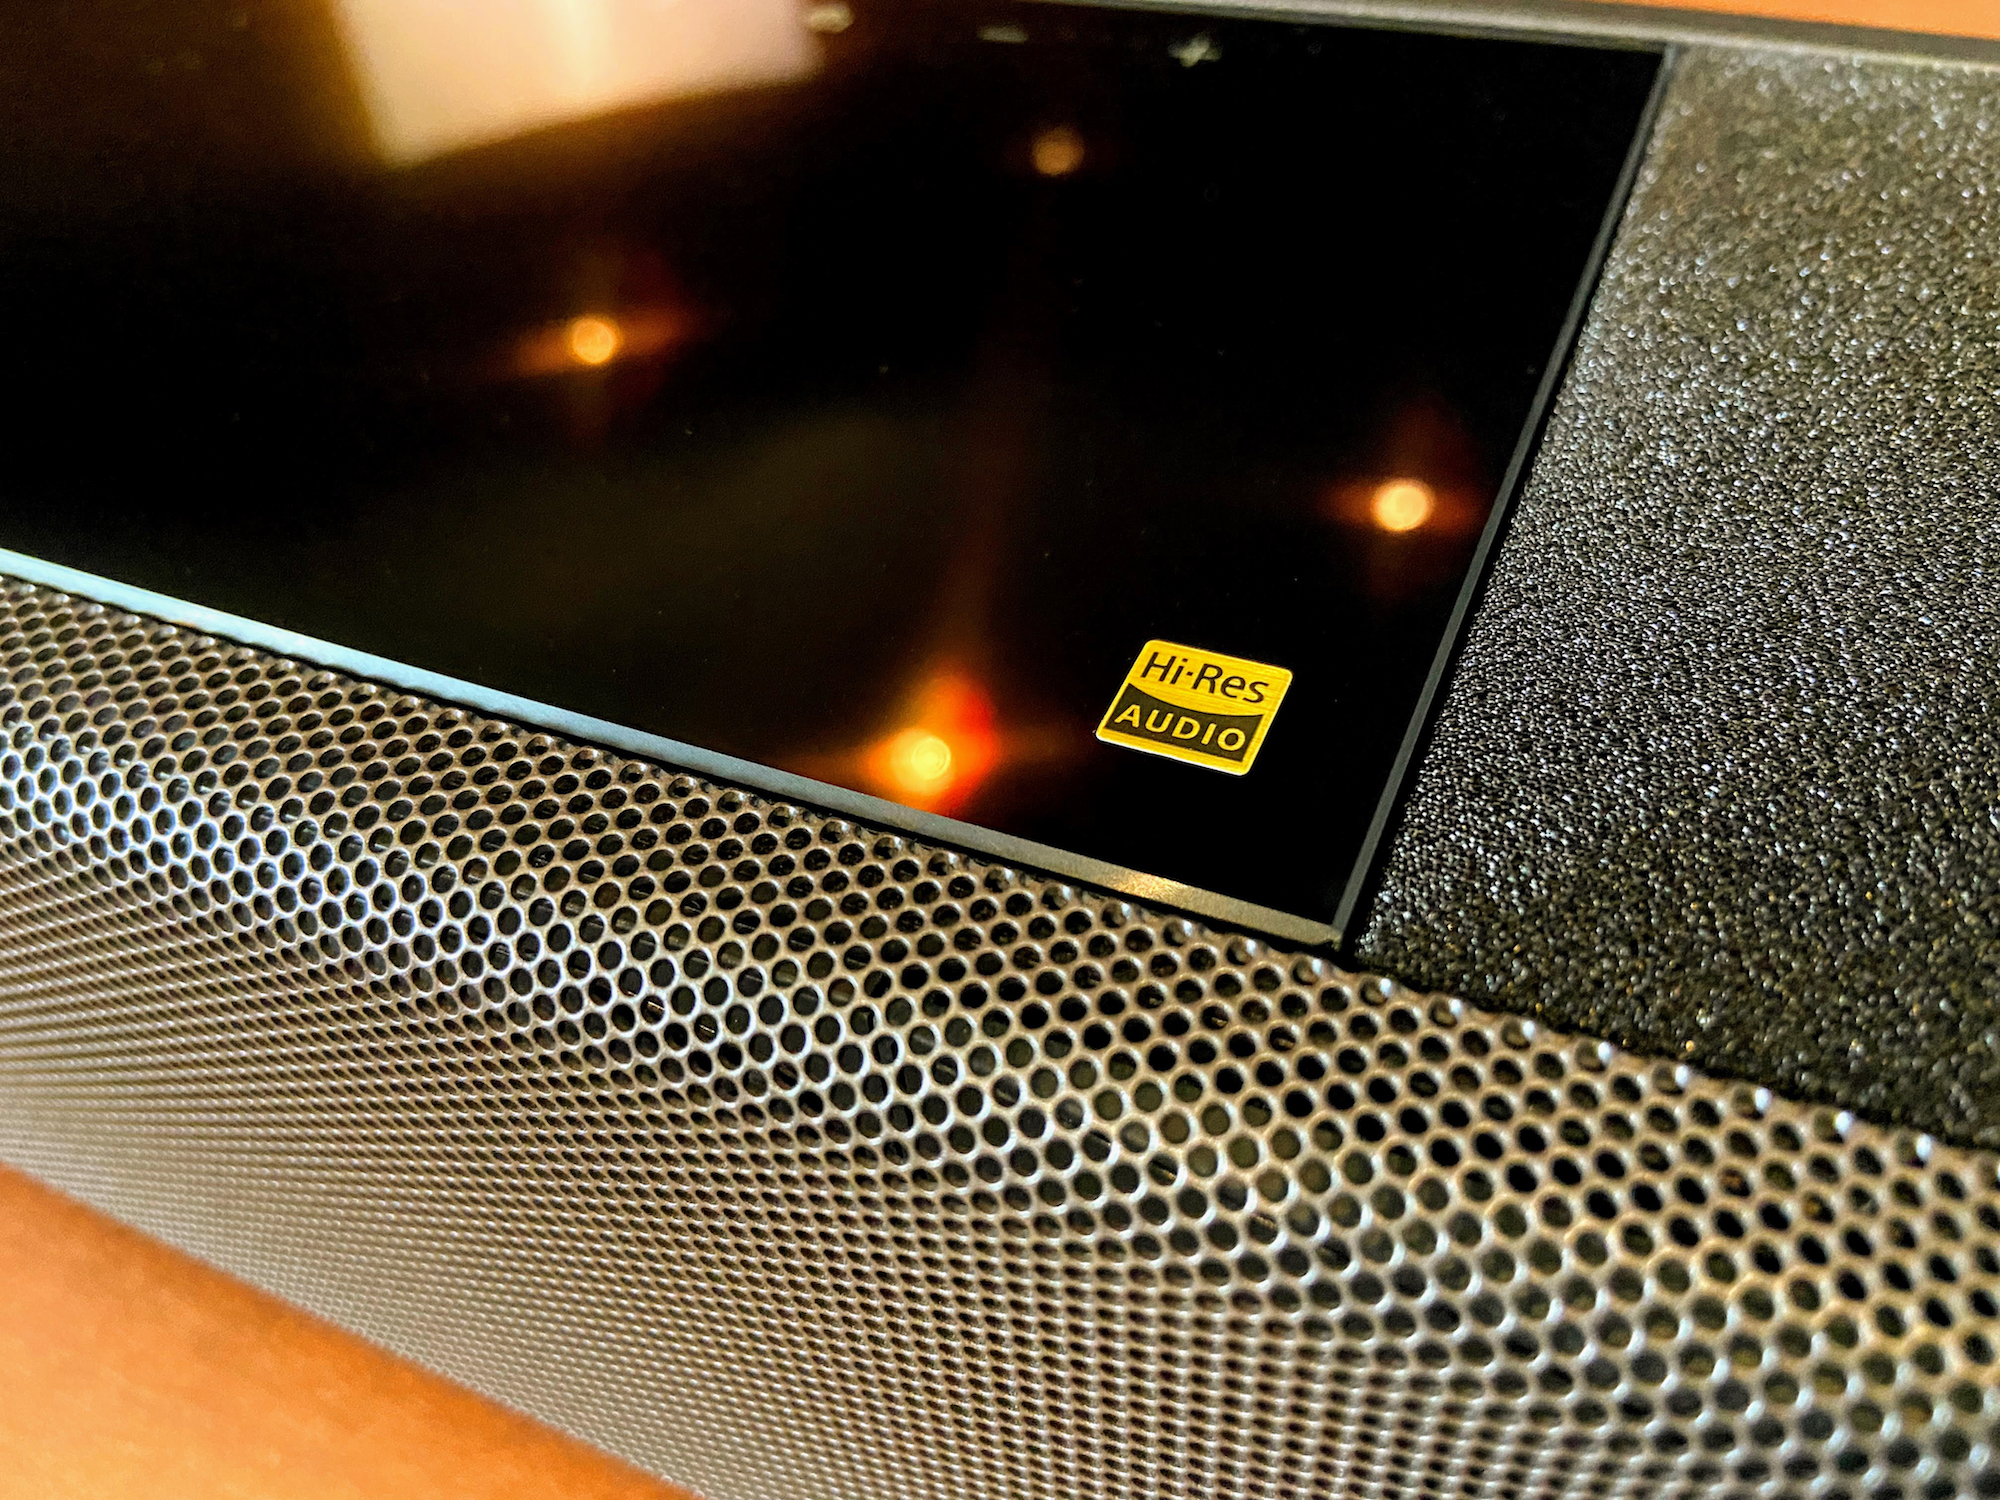 Sony HT-A7000 Review: A Fully-Loaded Soundbar Experience | Digital